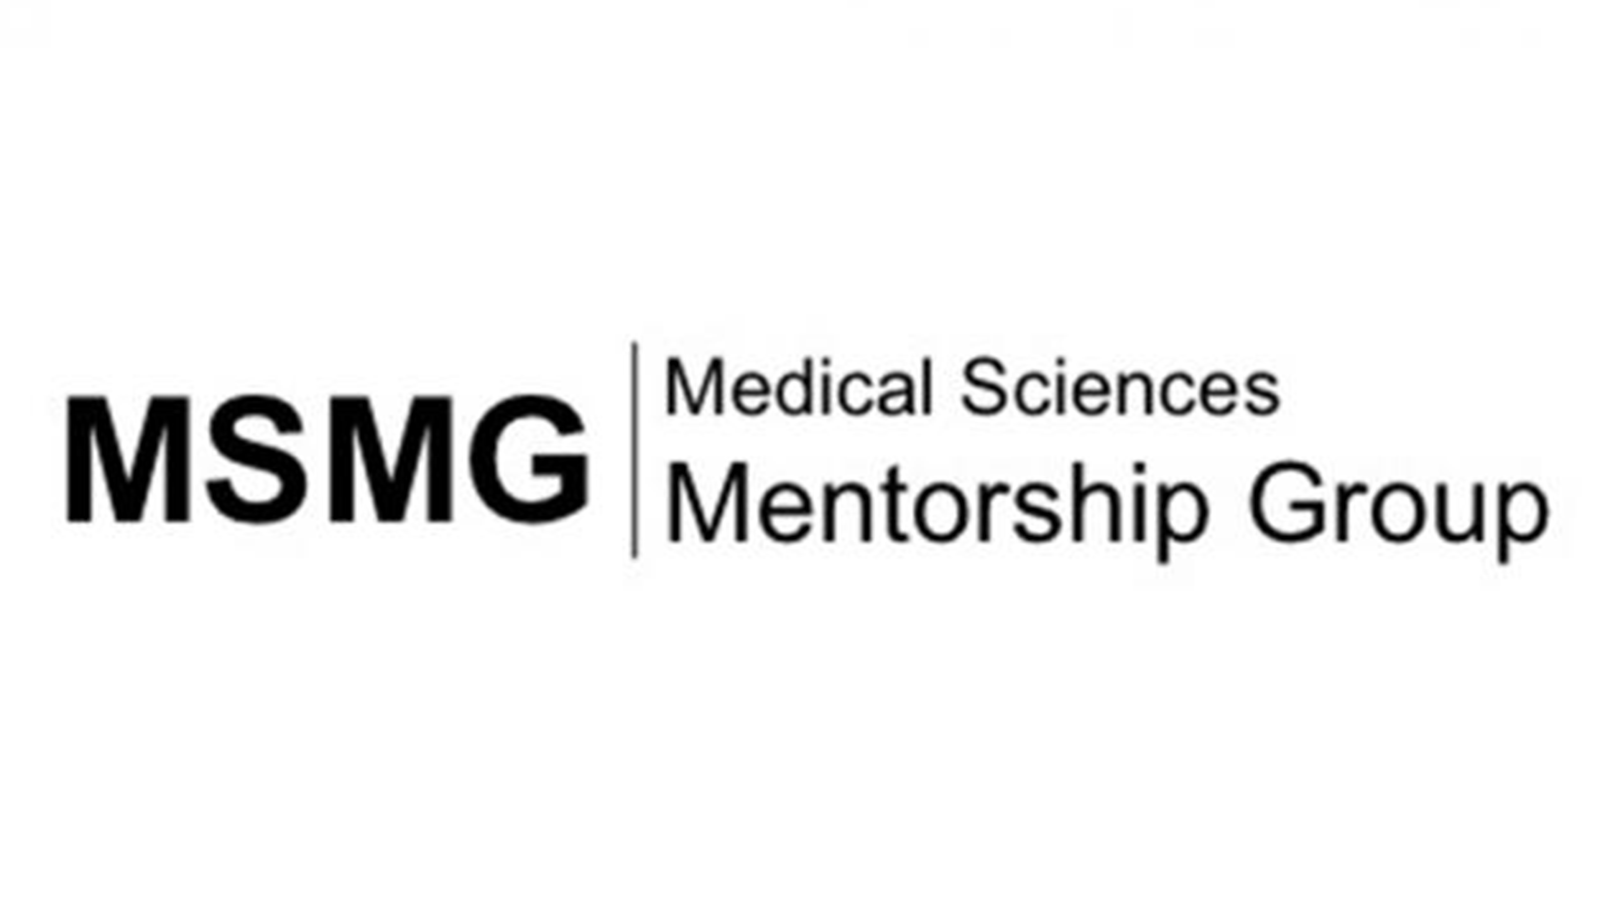 Medical Sciences Mentorship Group